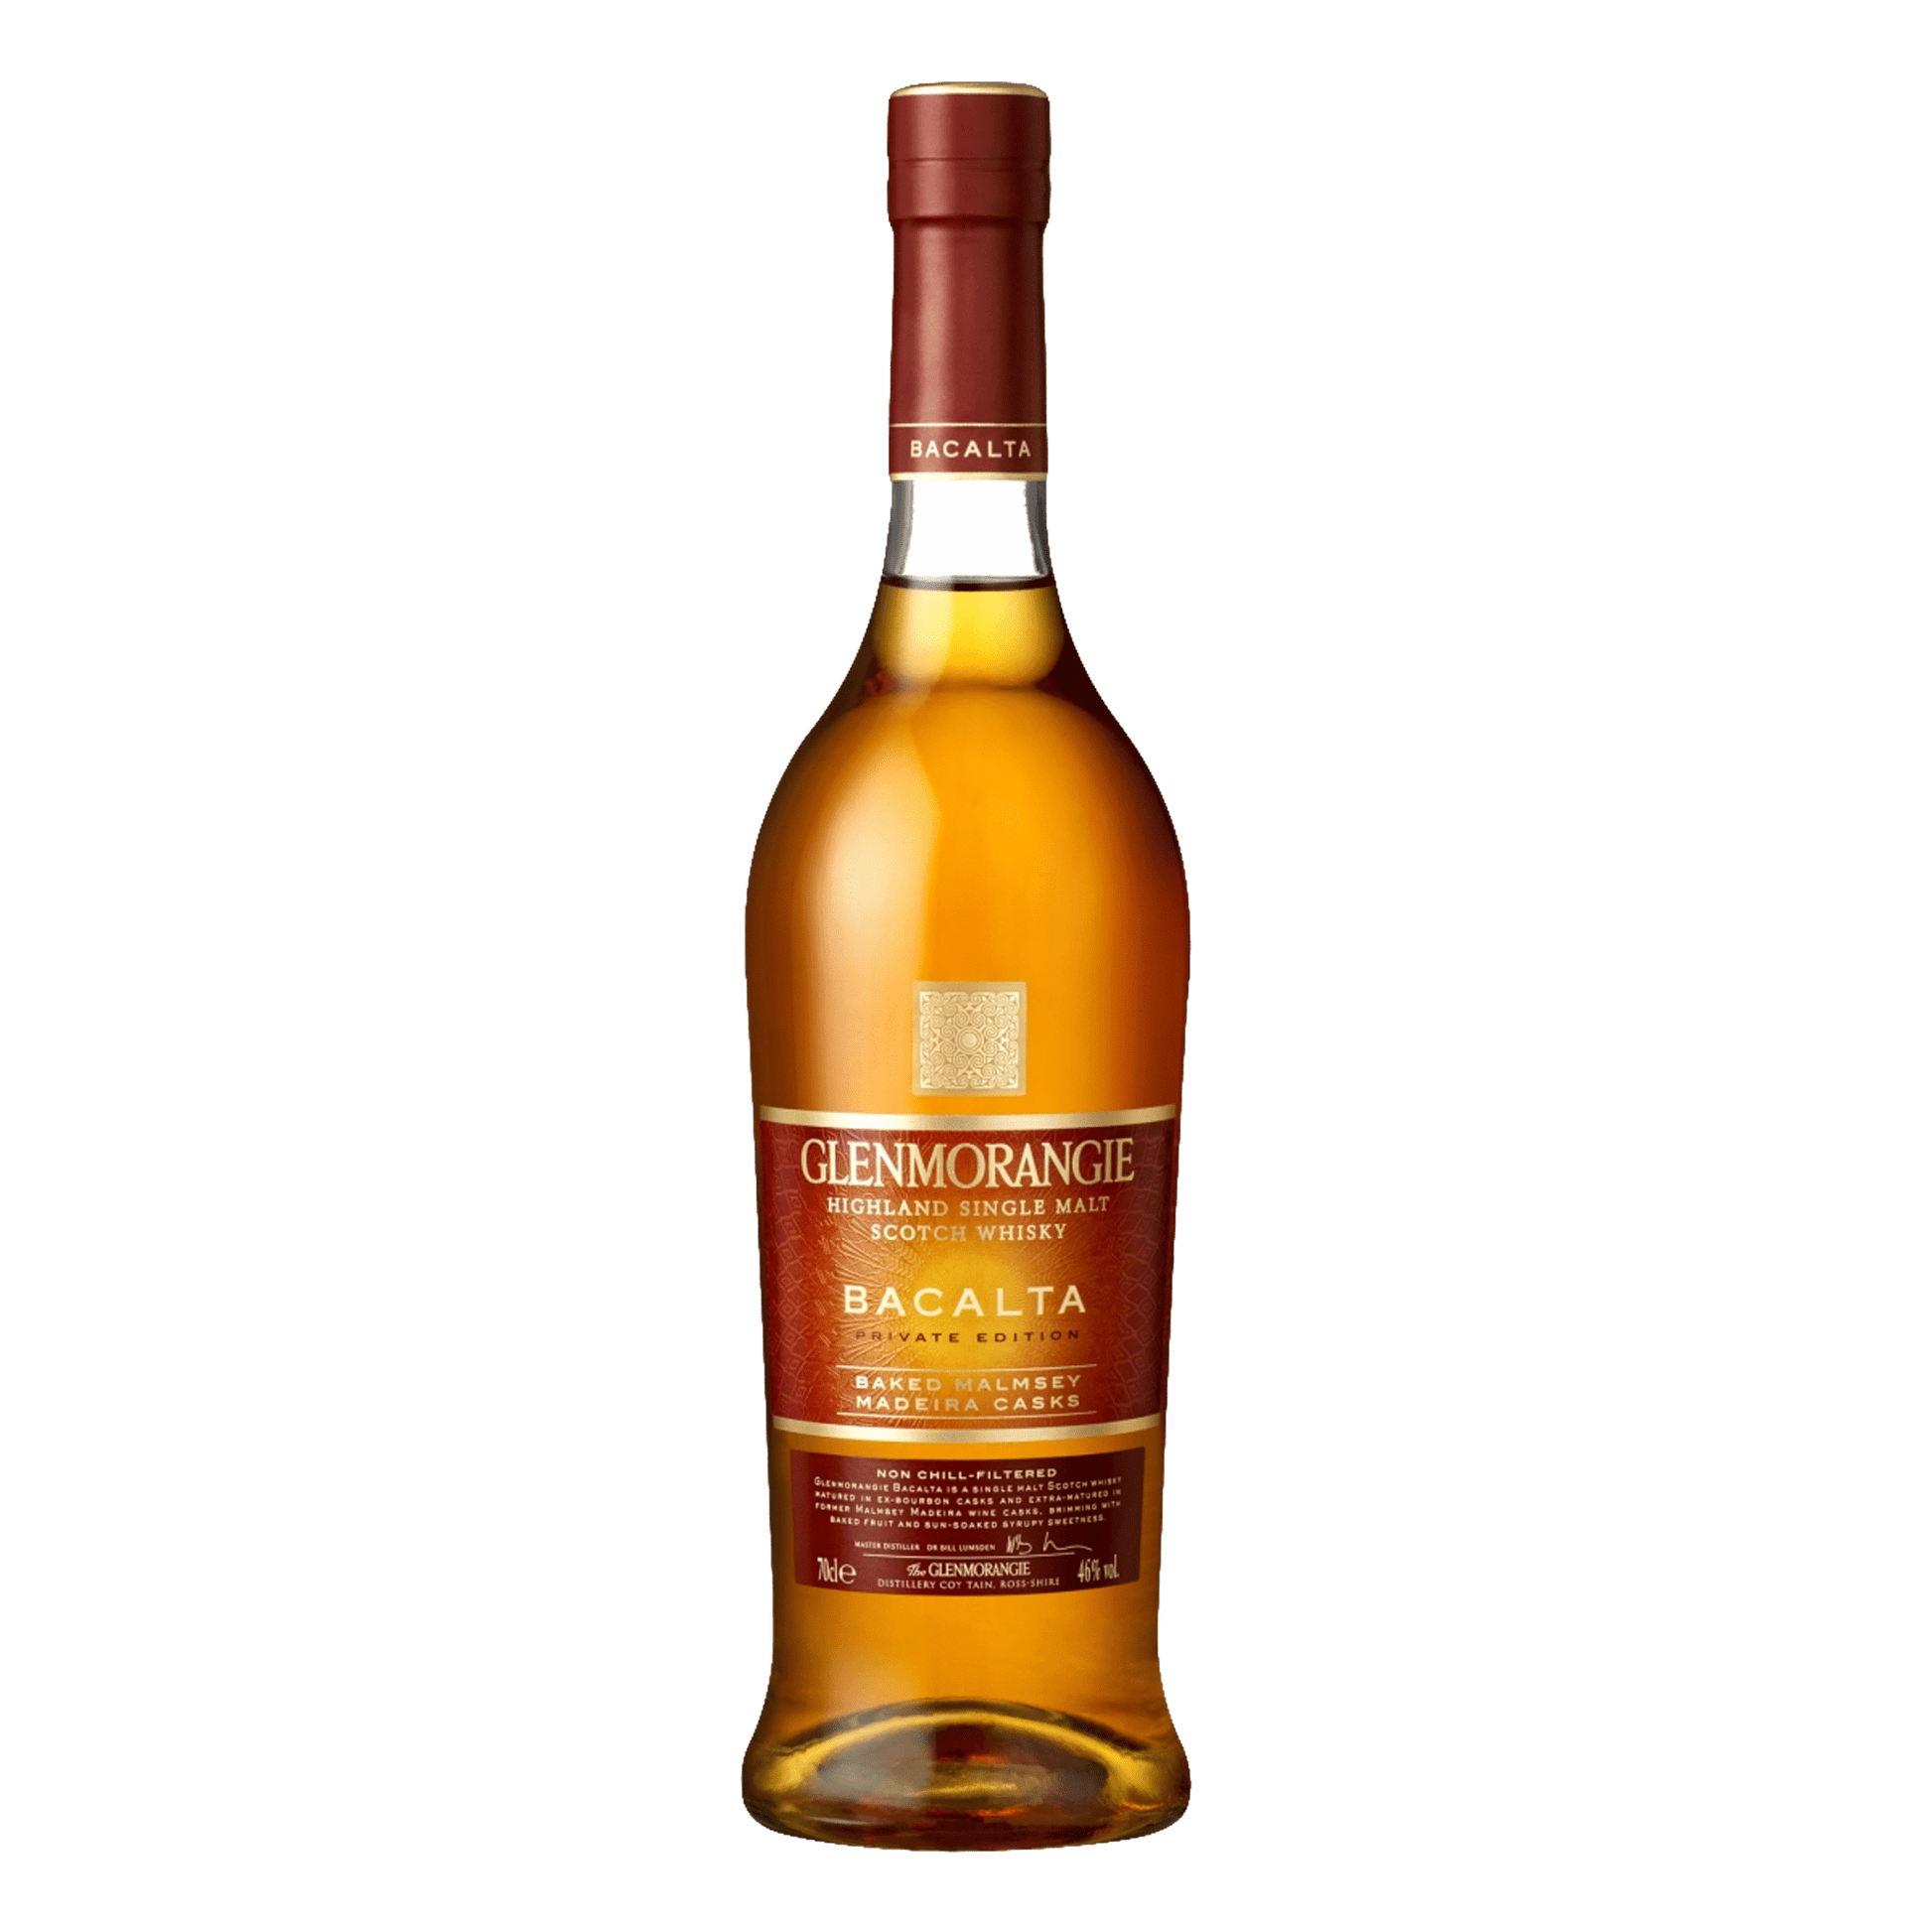 Glenmorangie Bacalta Private Edition Single Malt Scotch Whisky 700ml - CBD Cellars